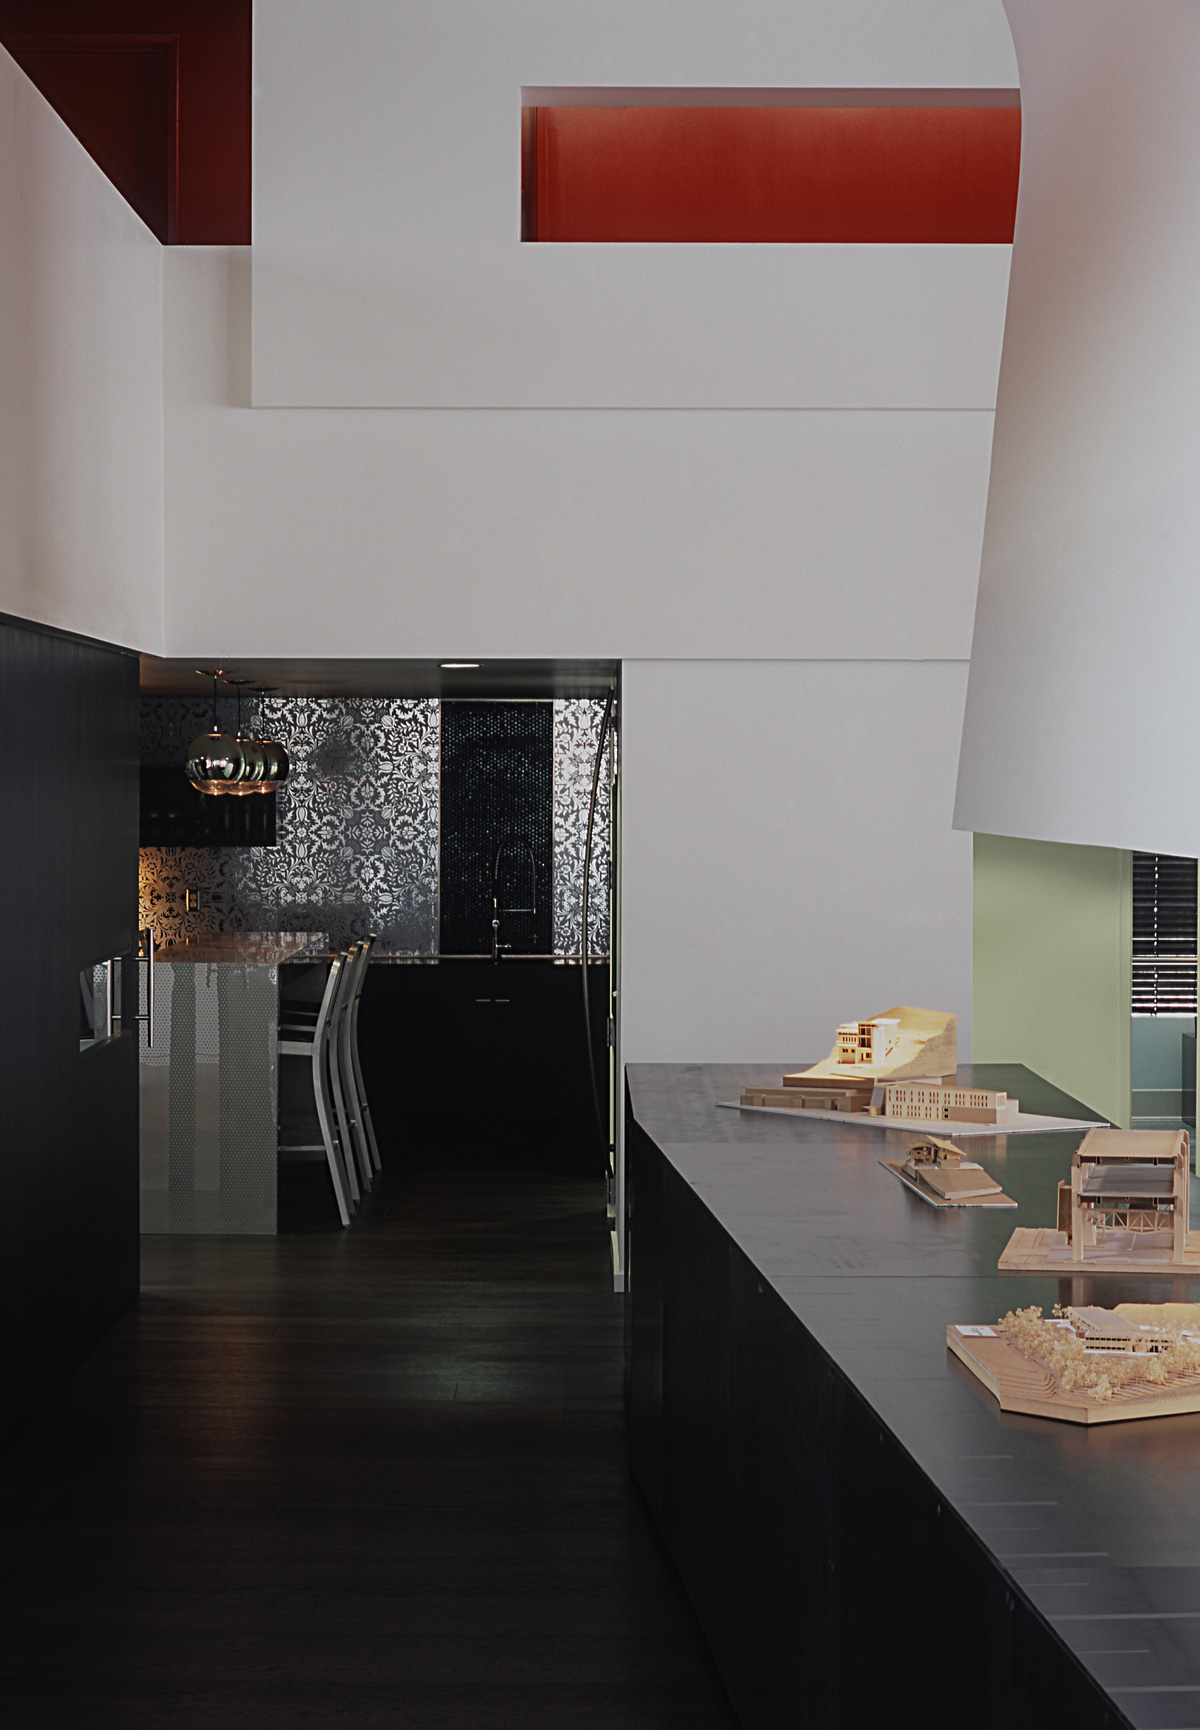 SkB studious kitchen and model countertops